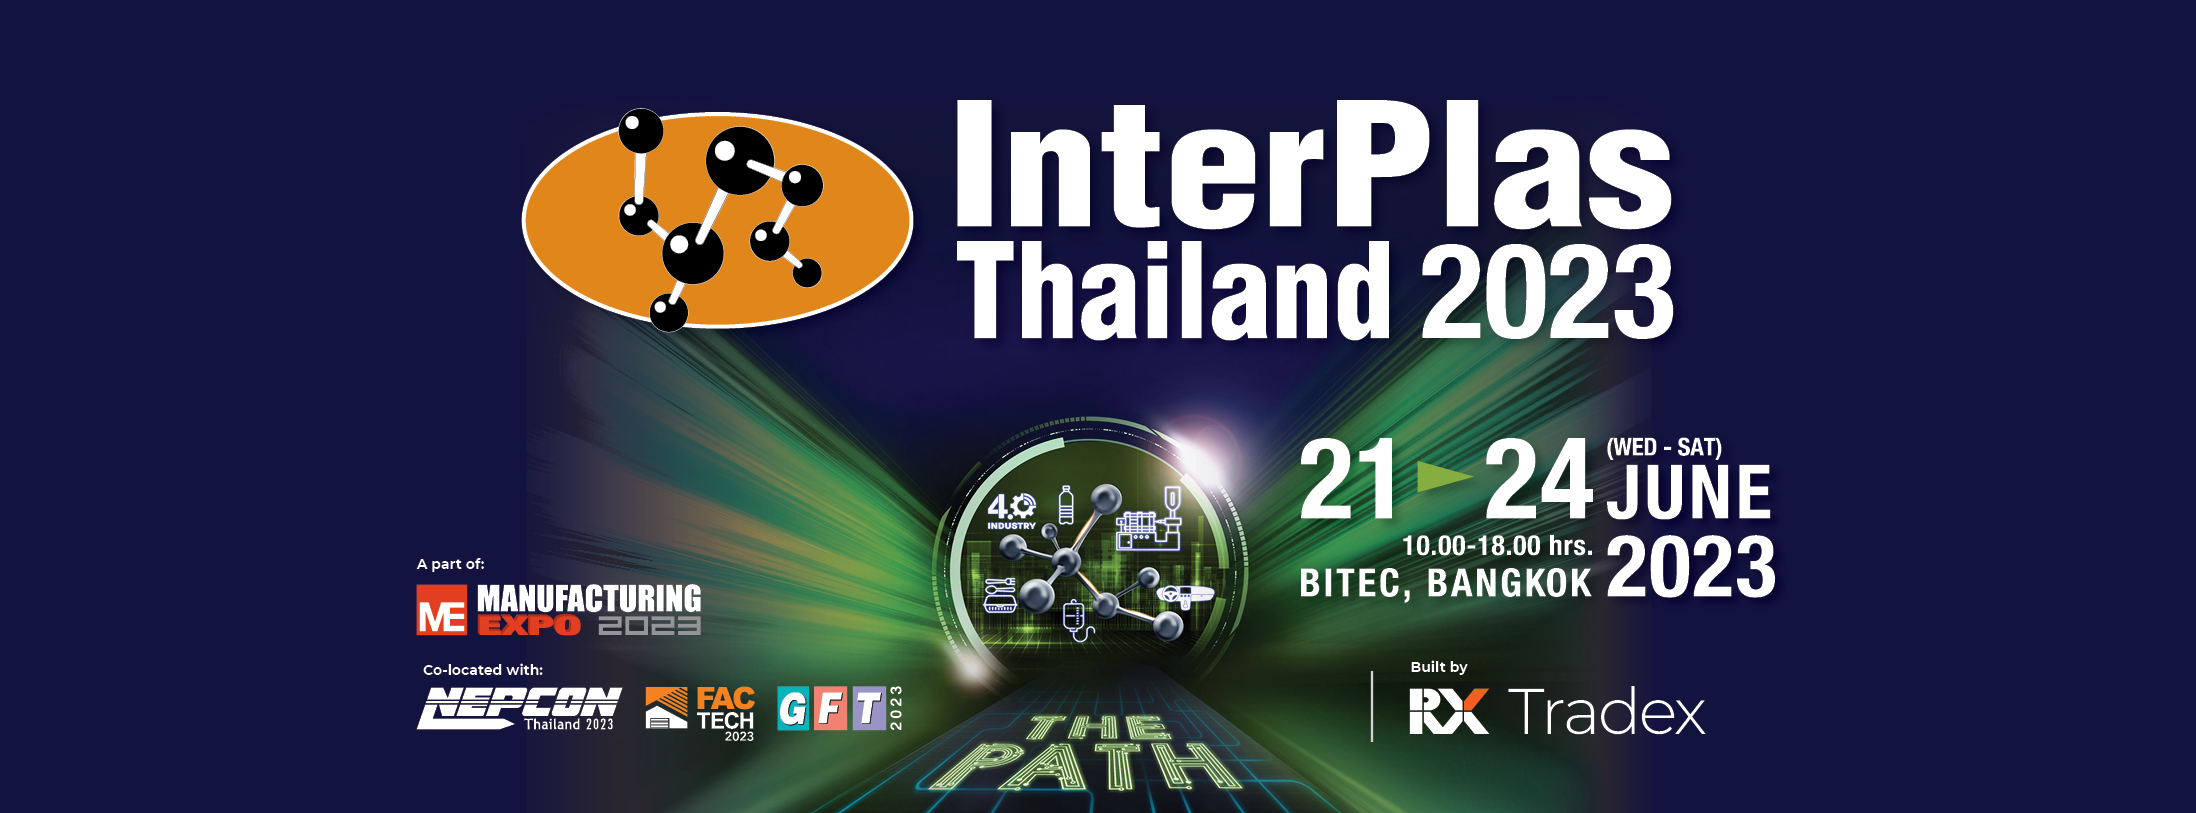 InterPlas Thailand 2023, Bangkok Thailand, Bangkok, Thailand